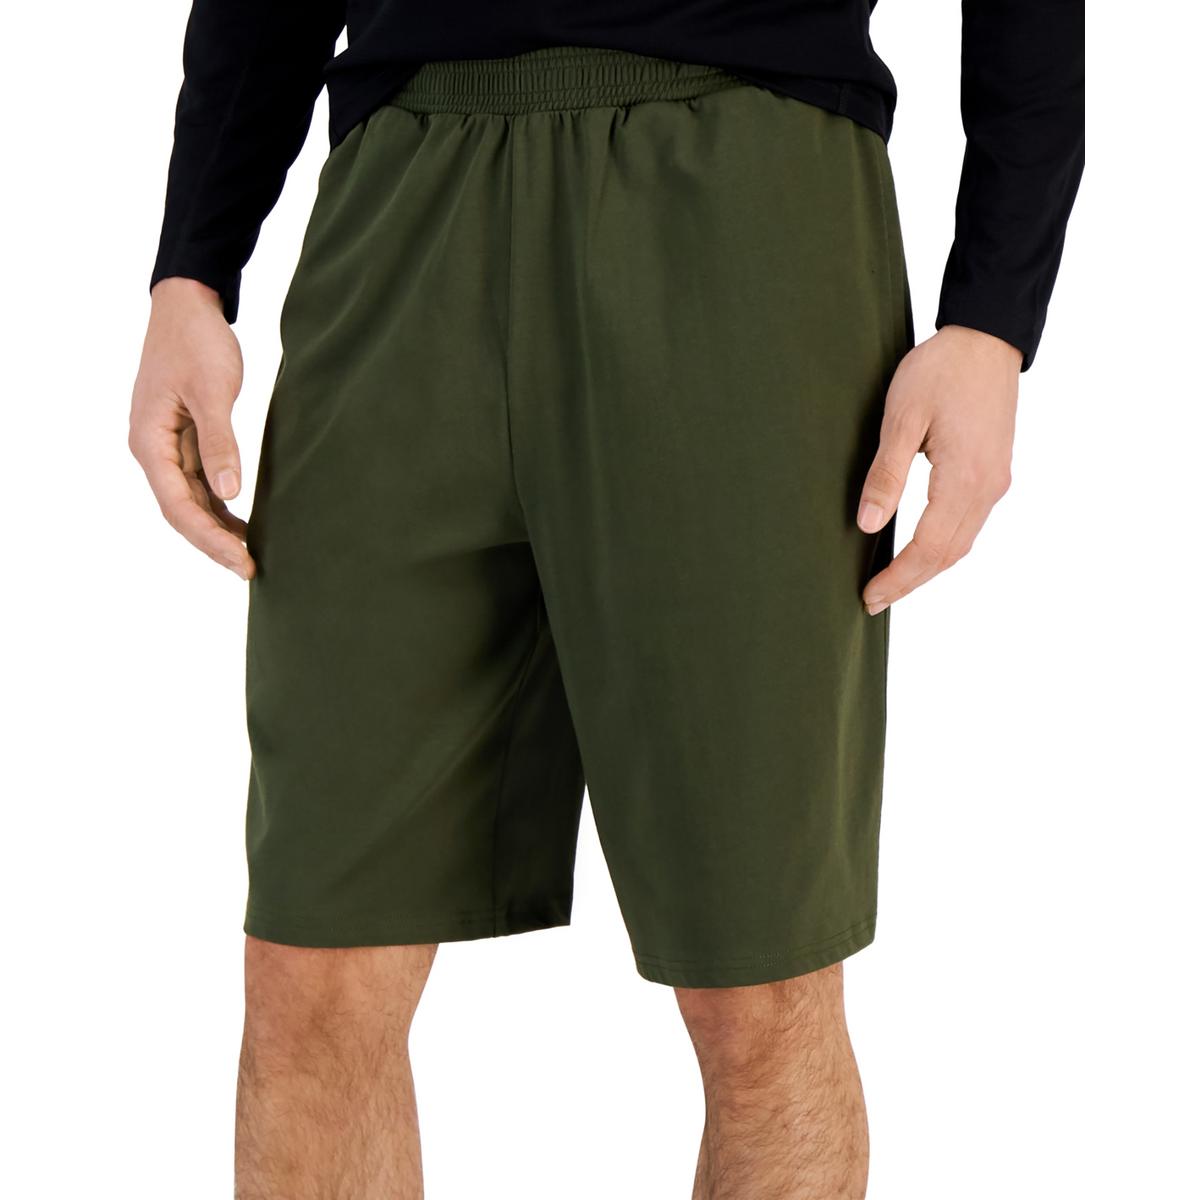 Ideology Mens Workout Activewear Shorts